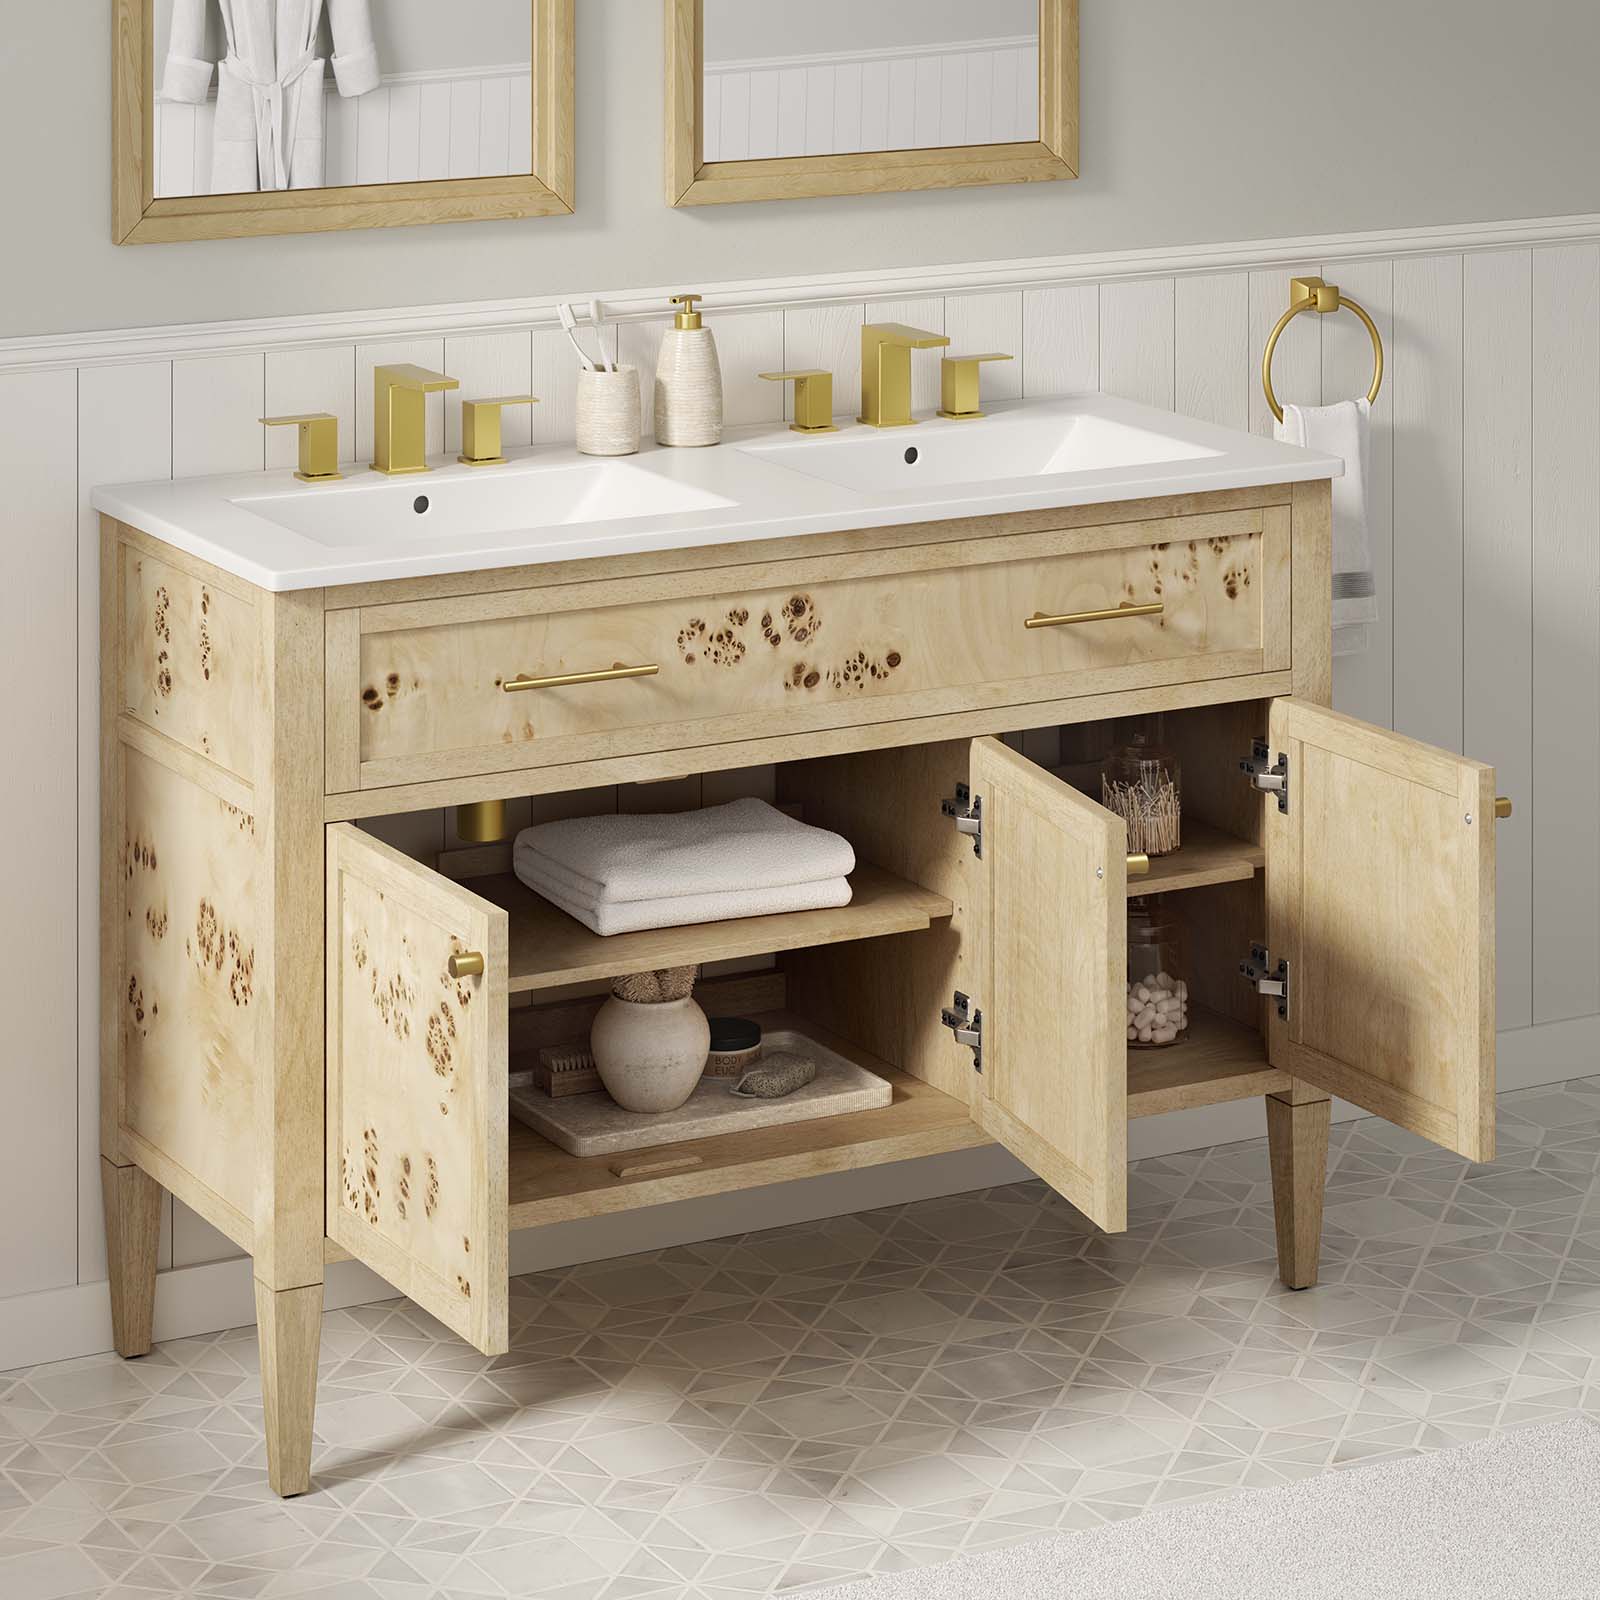 One - Elysian 48" Wood Double Sink Bathroom Vanity